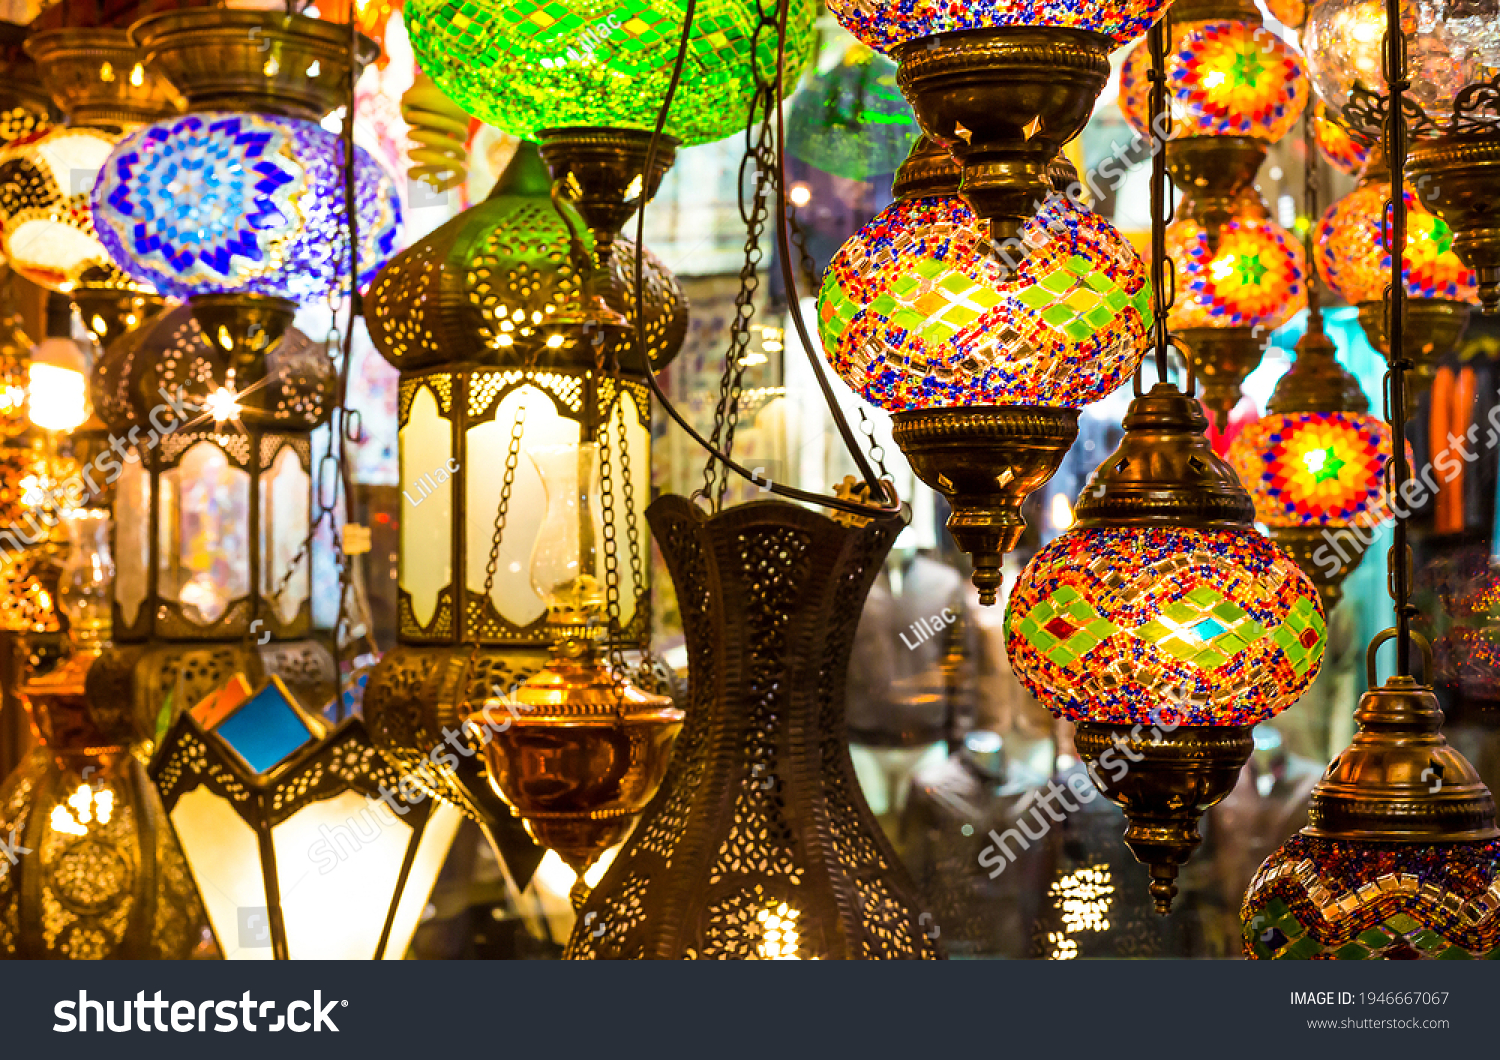 Oriental lamps in the Turkish bazaar. Lamp in East style #1946667067